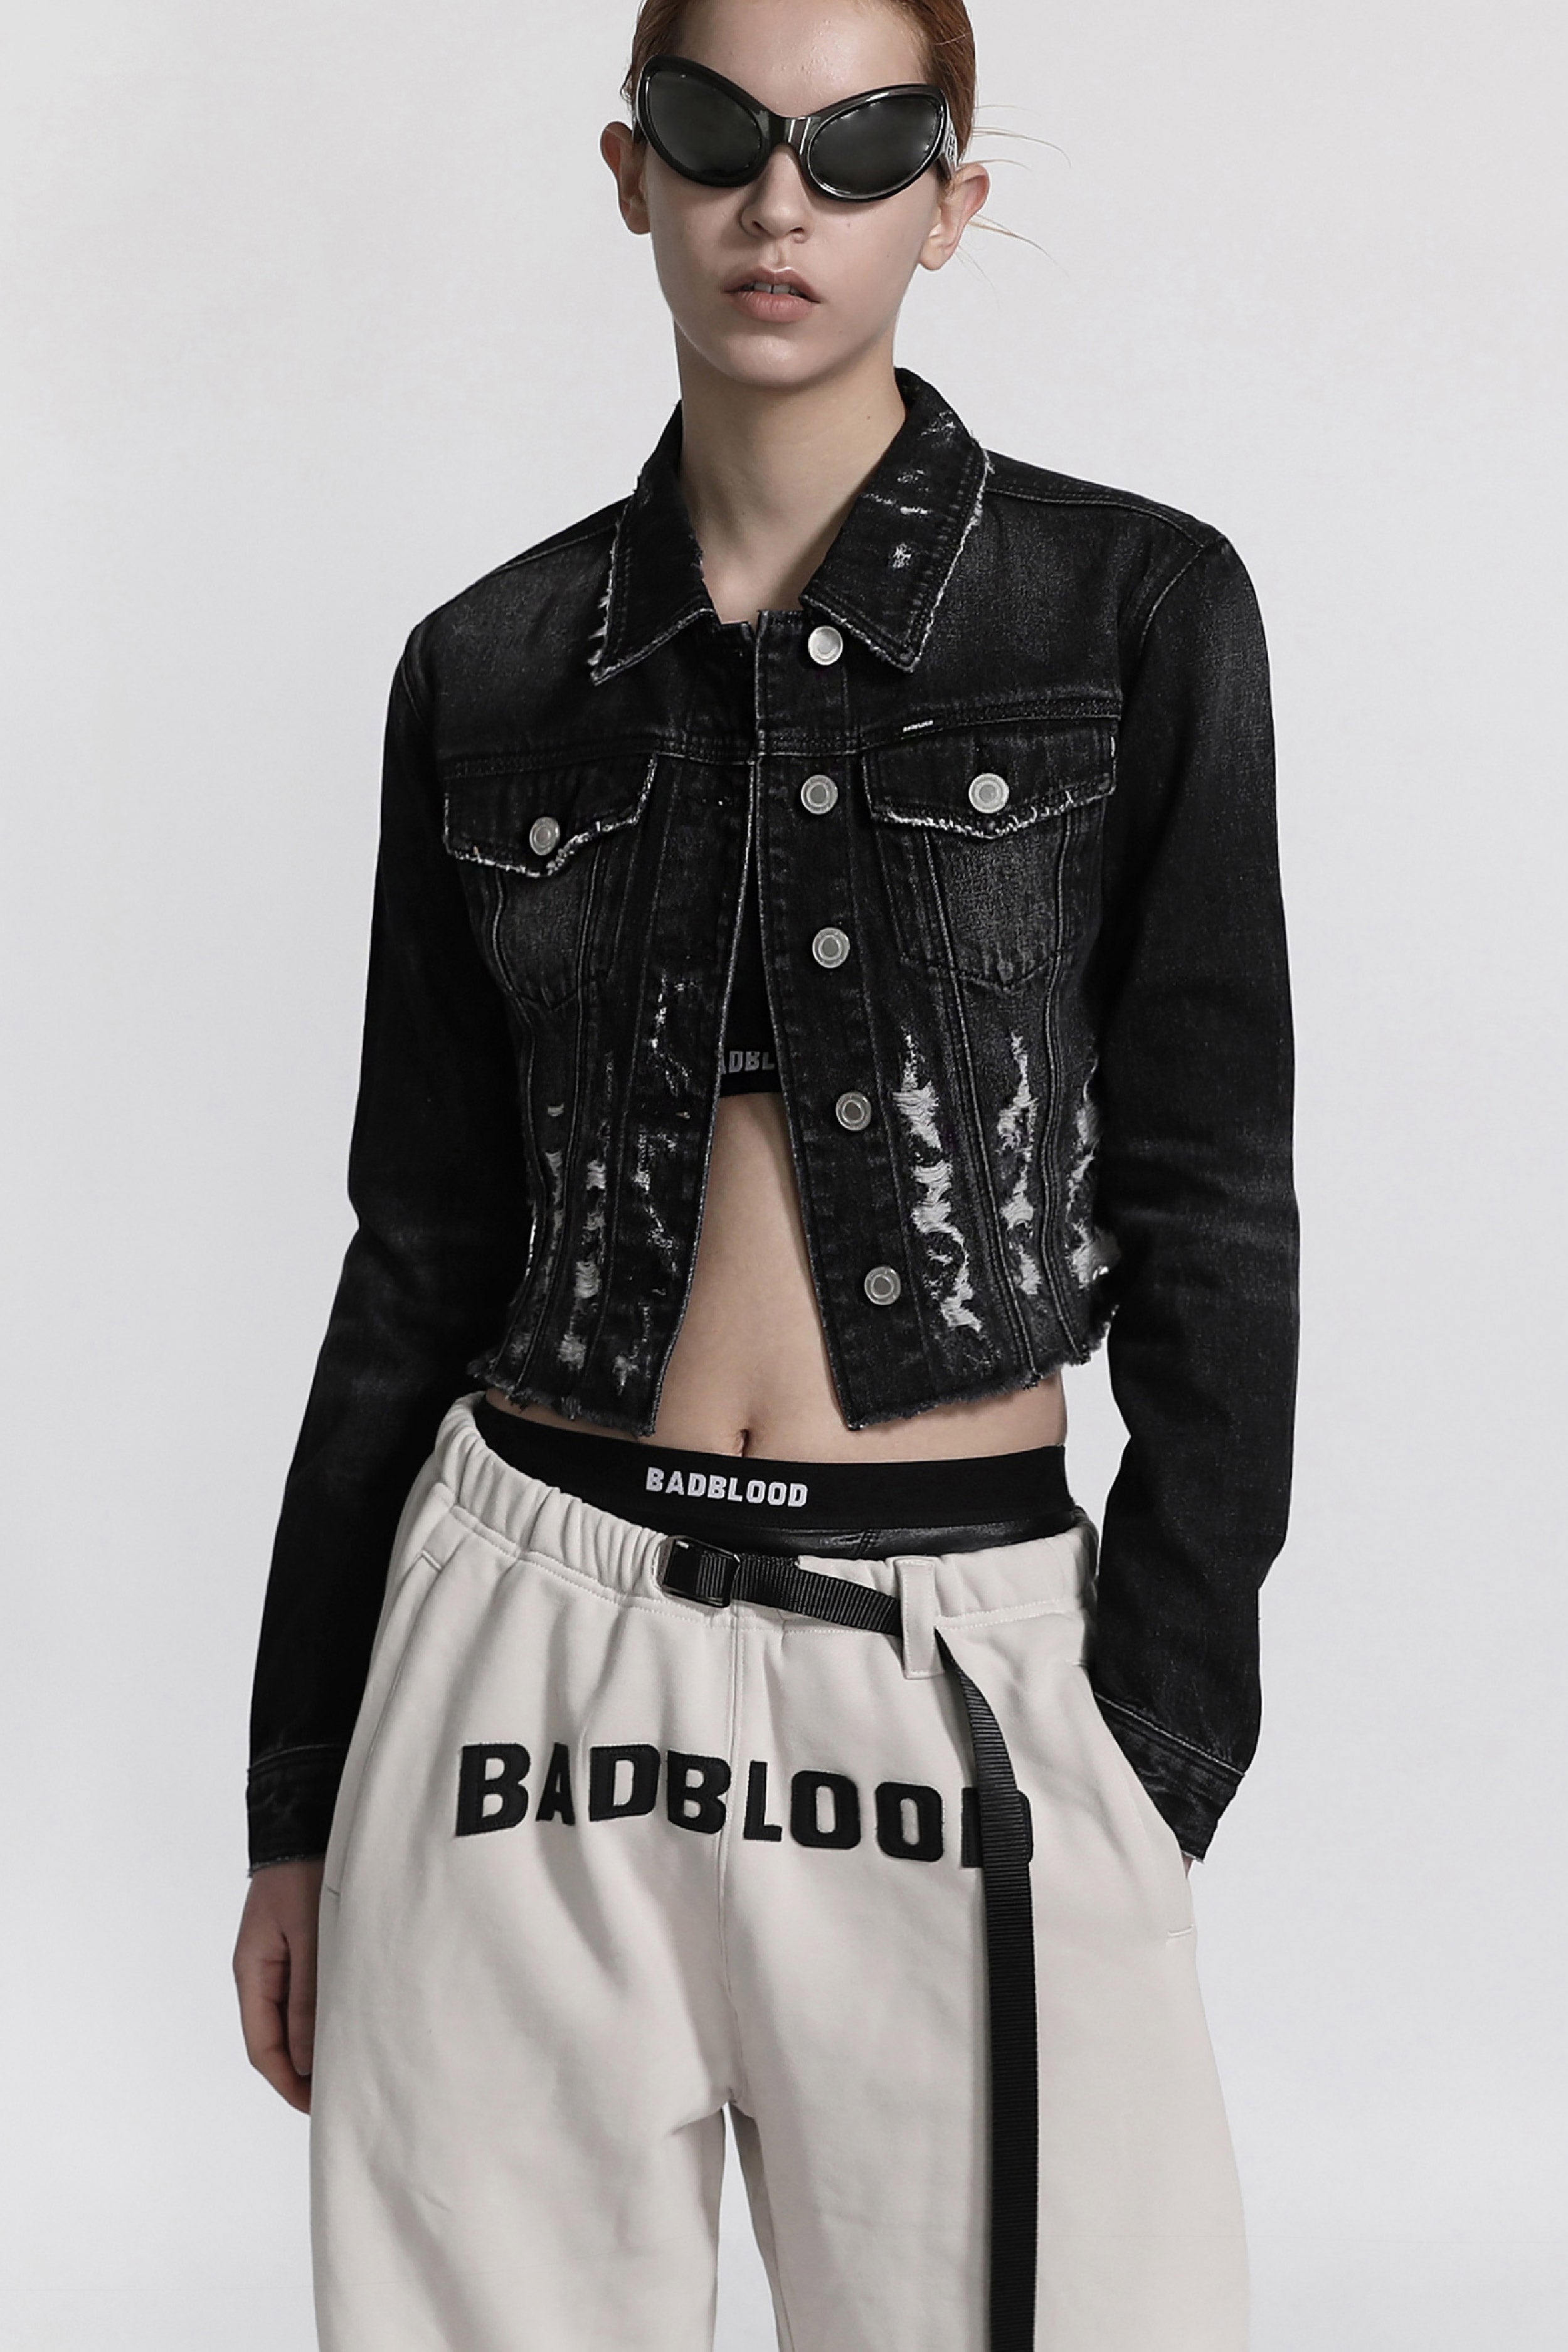 Badblood Leather Logo 2 Way Sweatpants Loose Fit Studio